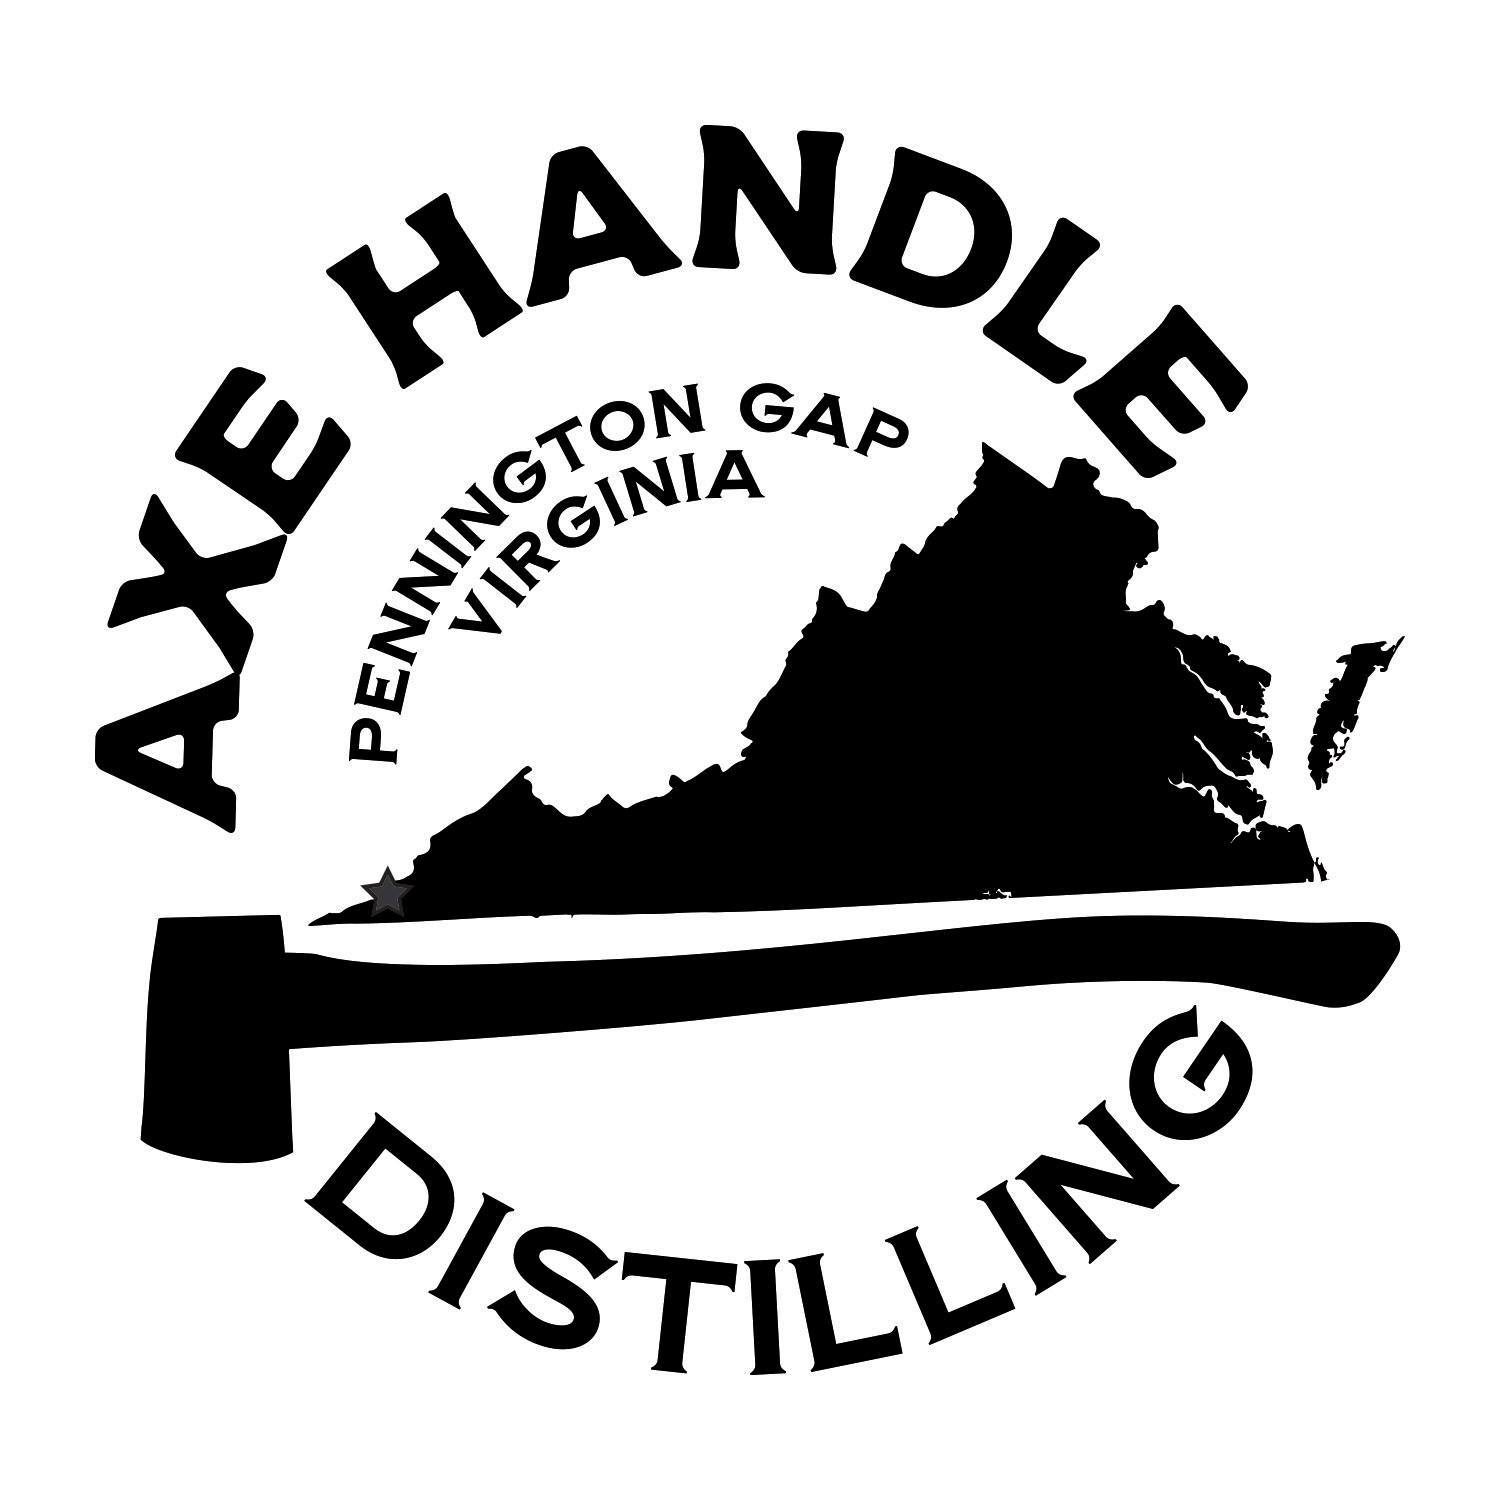 Axe Handle Distilling